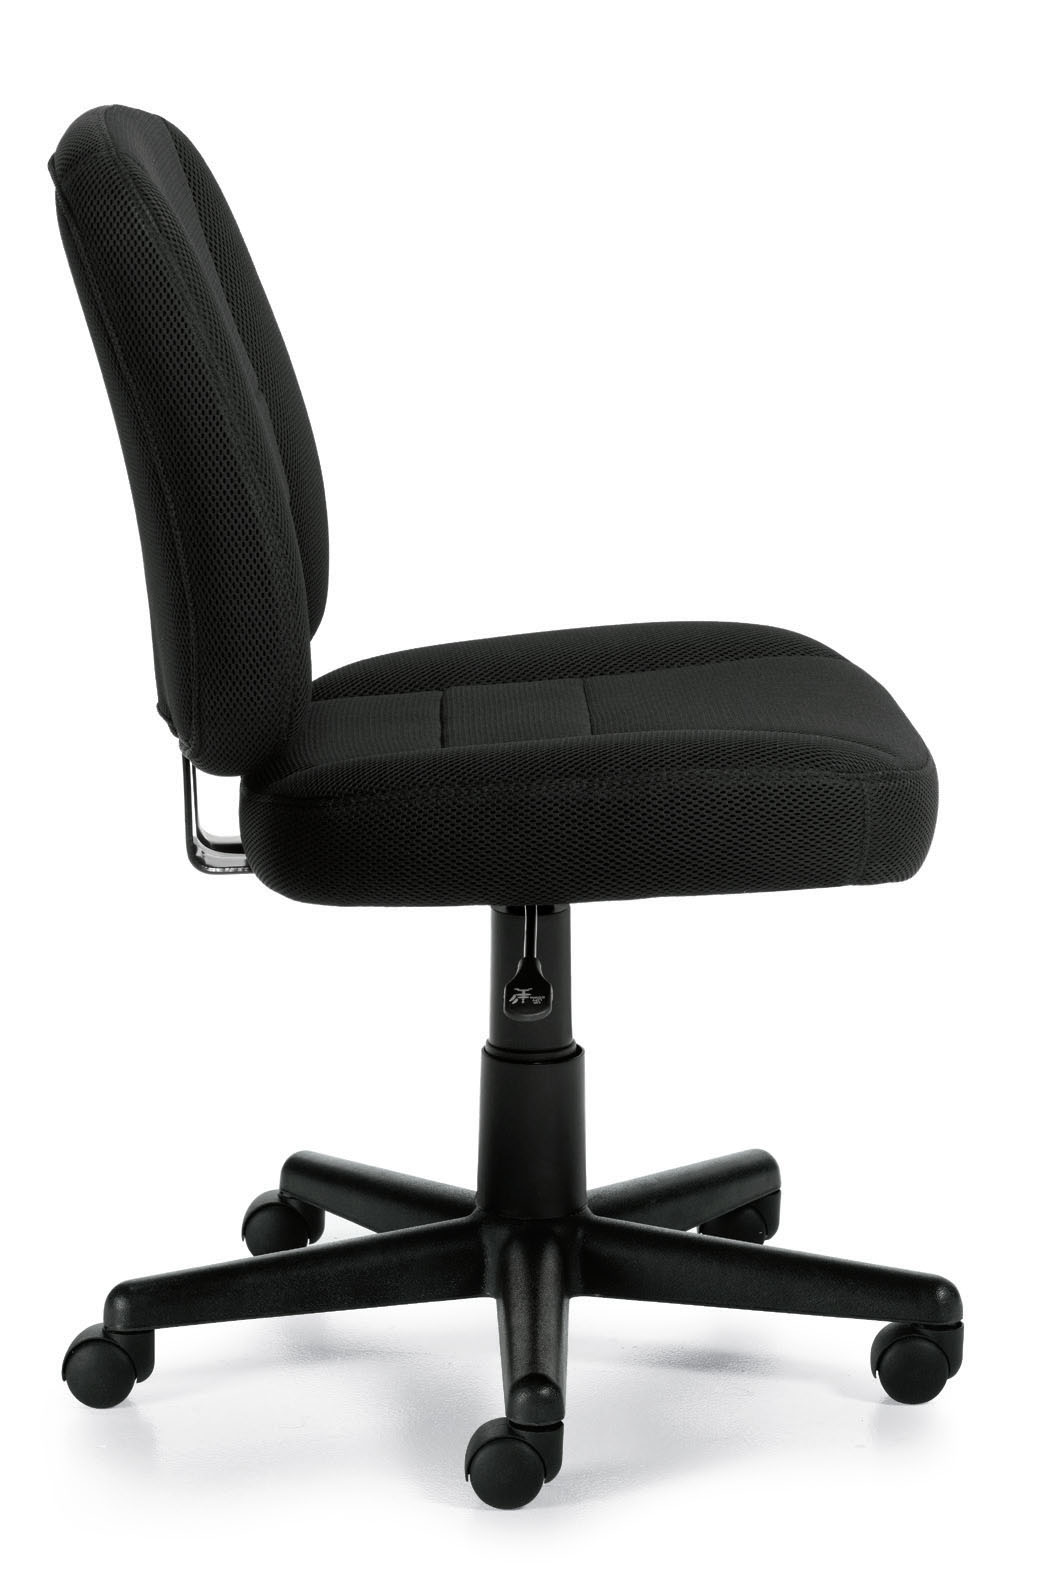 Offices To Go™ Armless Air Mesh Task Chair, OTG11343B